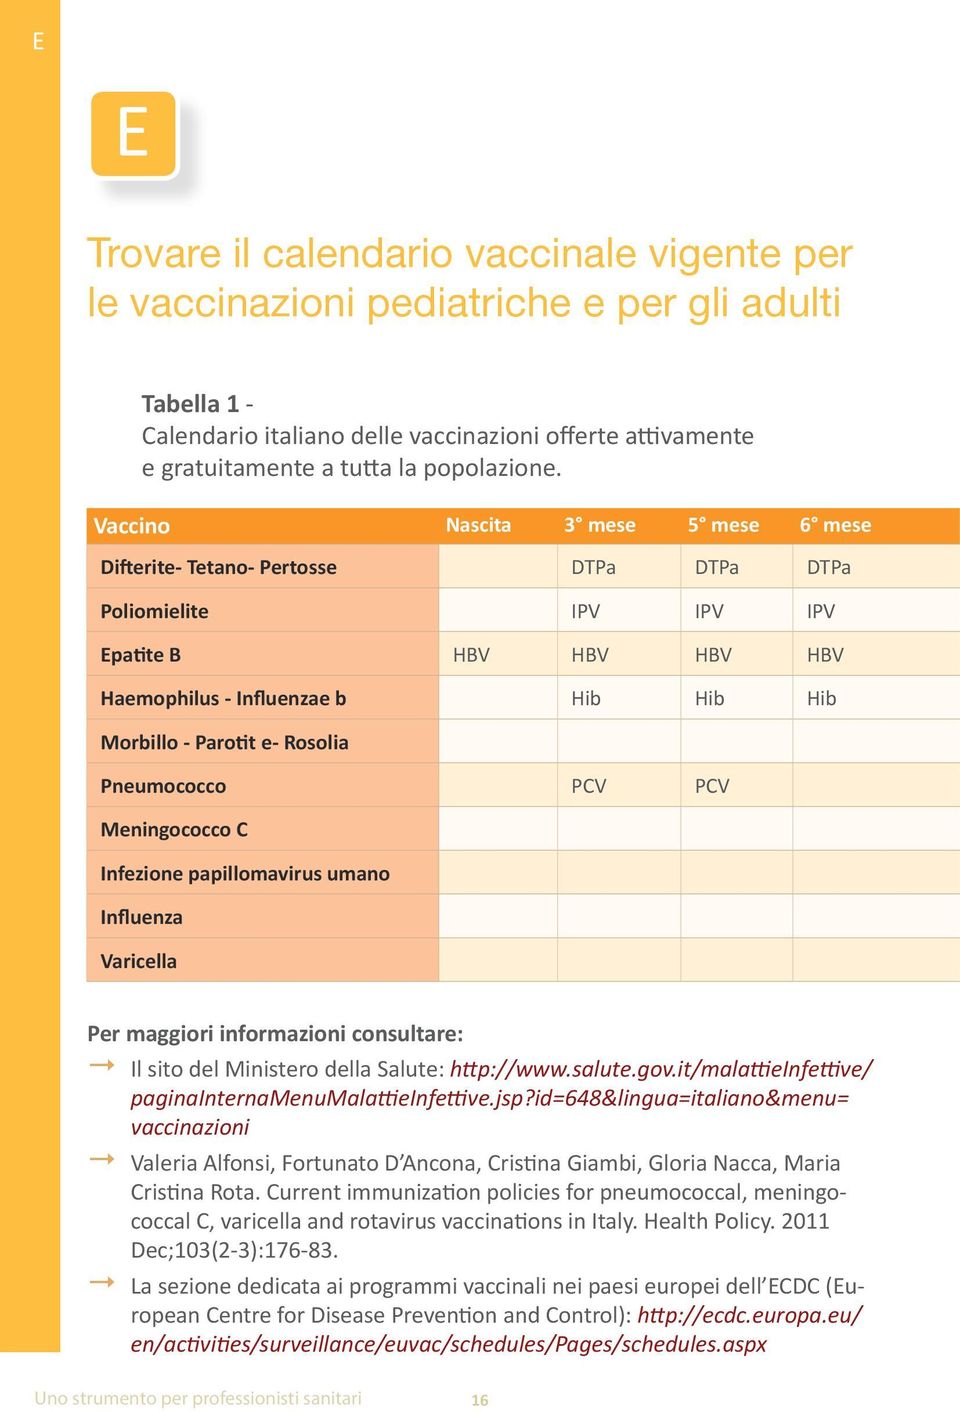 Vaccino Nascita 3 mese 5 mese 6 mese Difterite- Tetano- Pertosse DTPa DTPa DTPa Poliomielite IPV IPV IPV Epatite B HBV HBV HBV HBV Haemophilus - Influenzae b Hib Hib Hib Morbillo - Parotit e- Rosolia